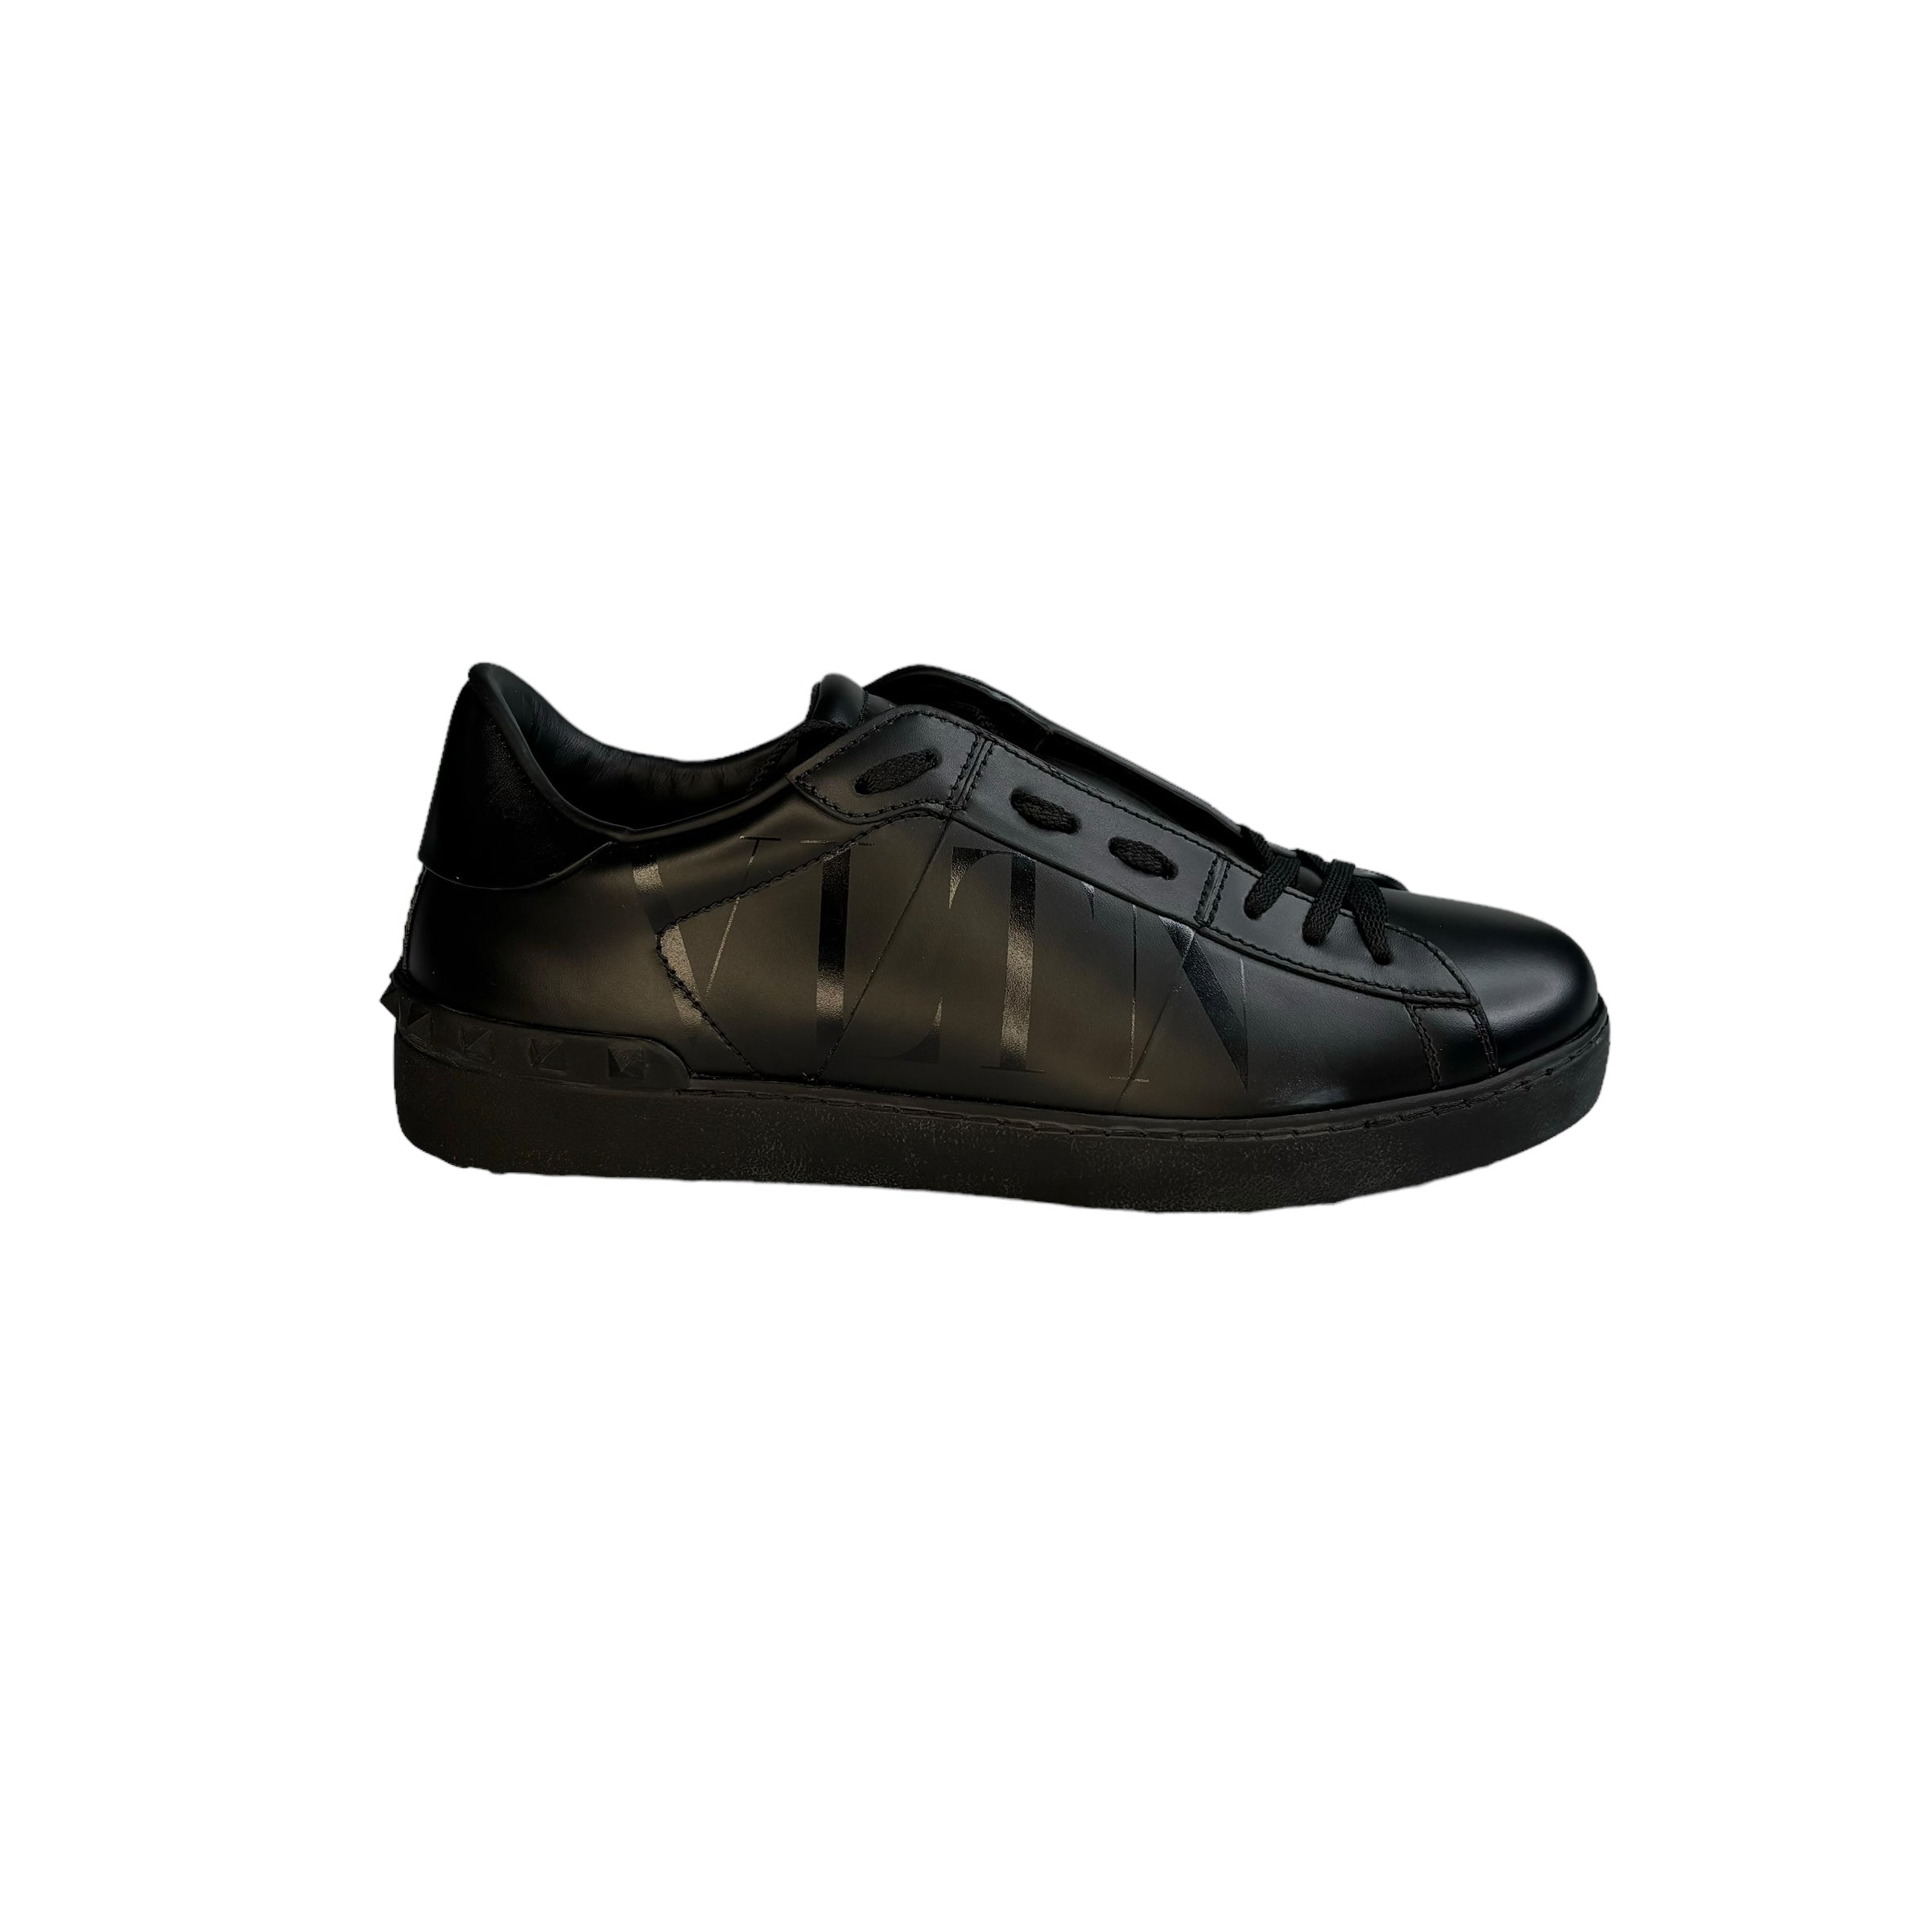 VALENTINO GARAVANI VLTN LOGO LowTop Leather Sneaker Black&Black